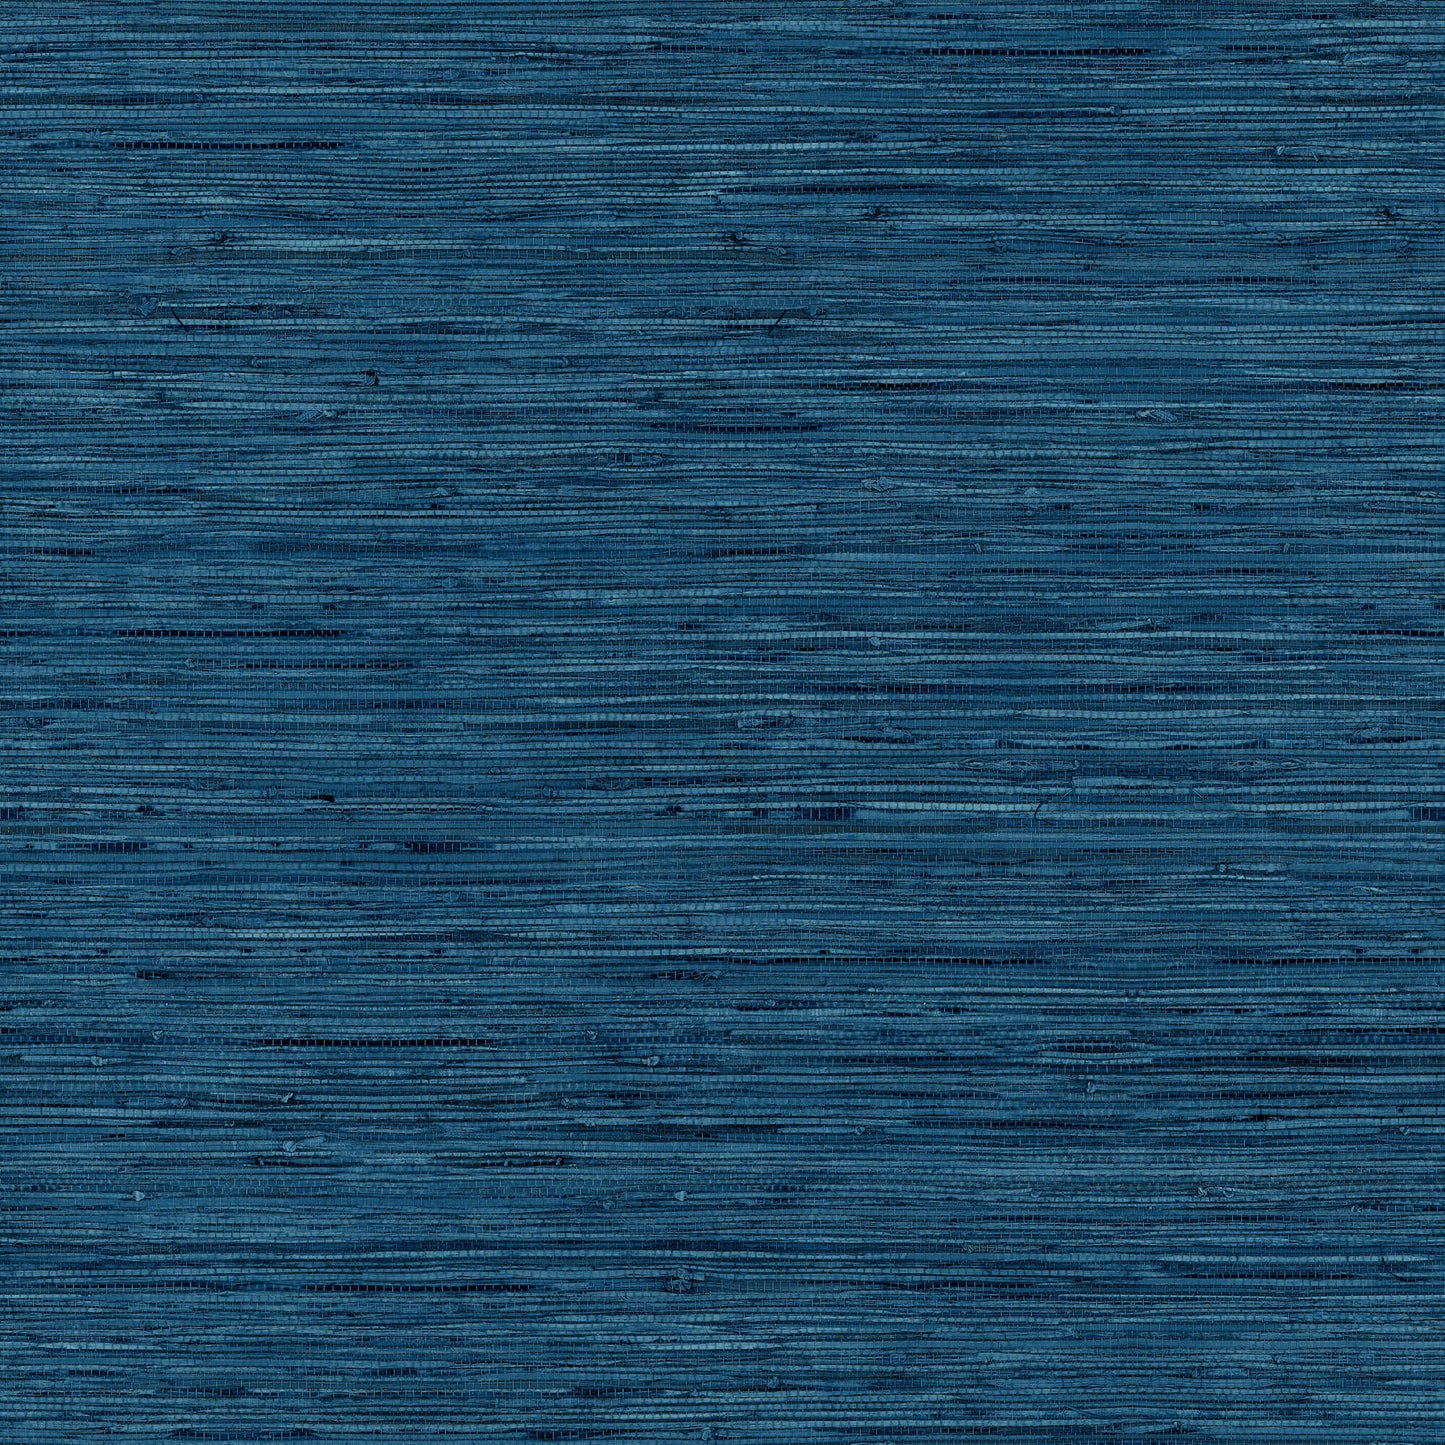 Faux Grasscloth Peel & Stick Wallpaper - Navy Blue